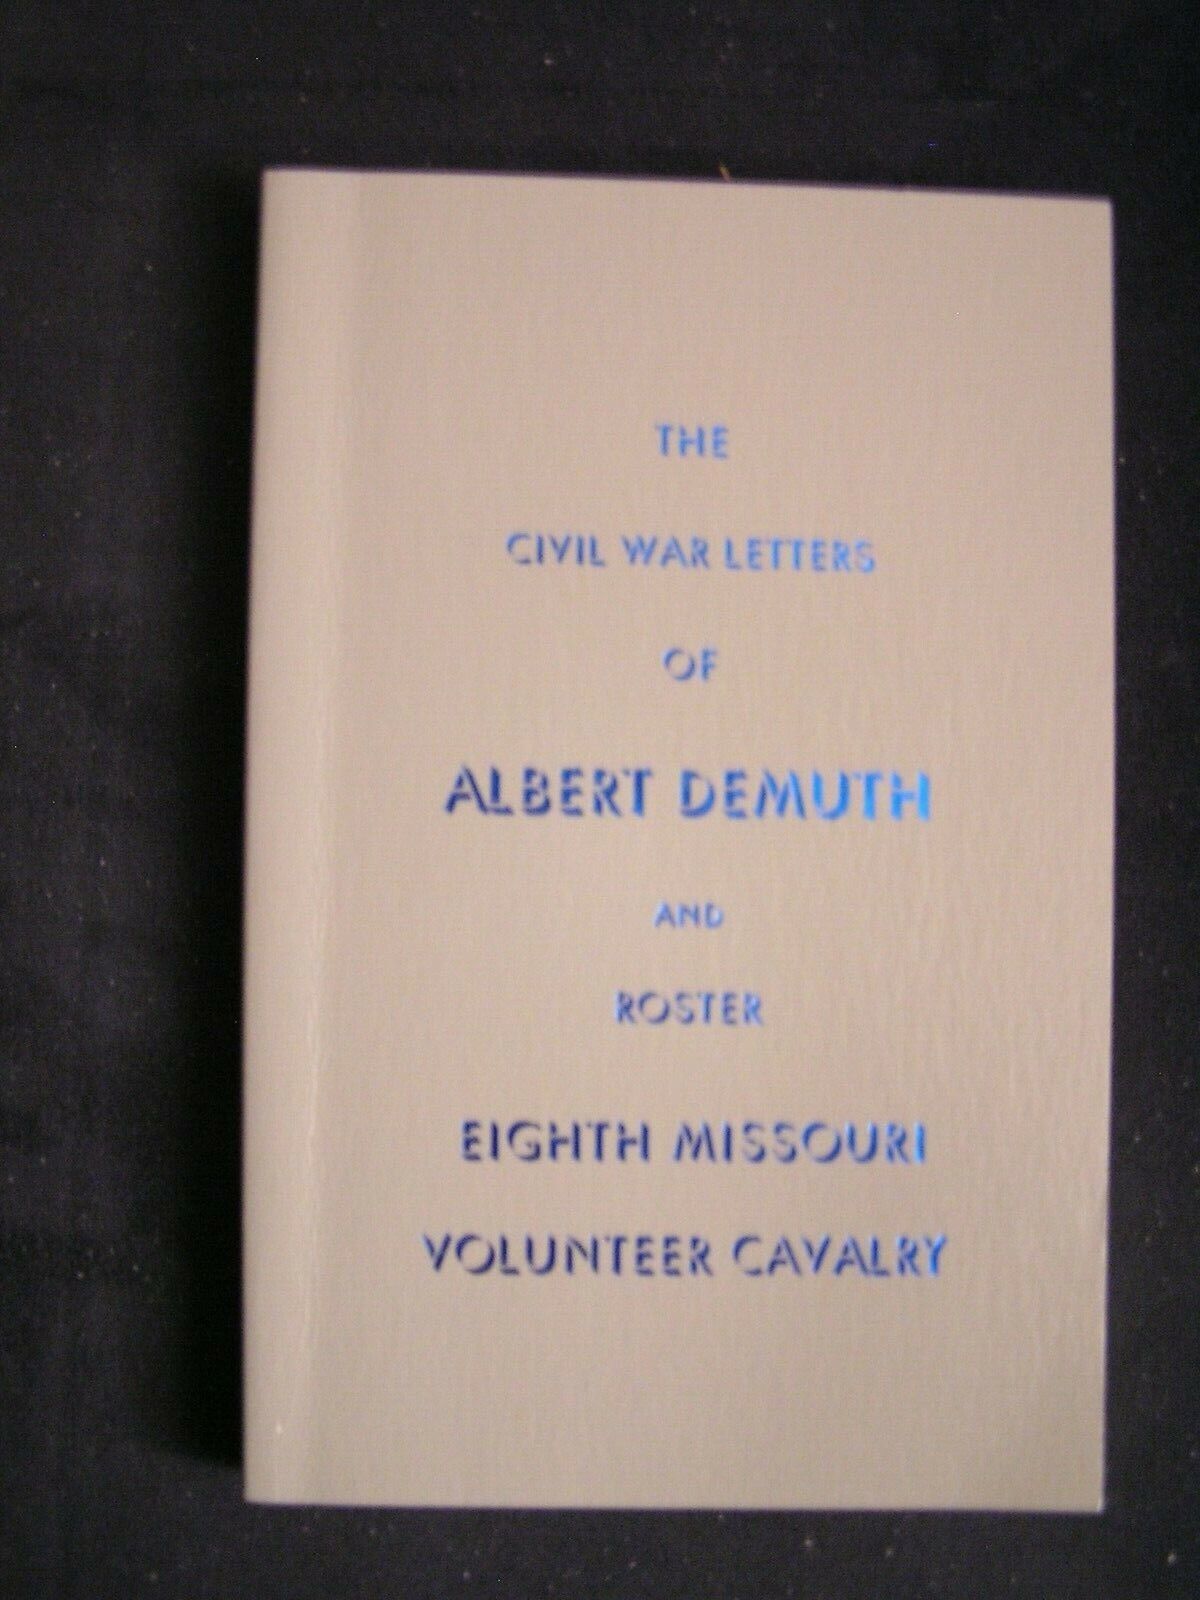 THE CIVIL WAR LETTERS OF ALBERT DEMUTH and Roster Eighth Missouri Volunteer Cav